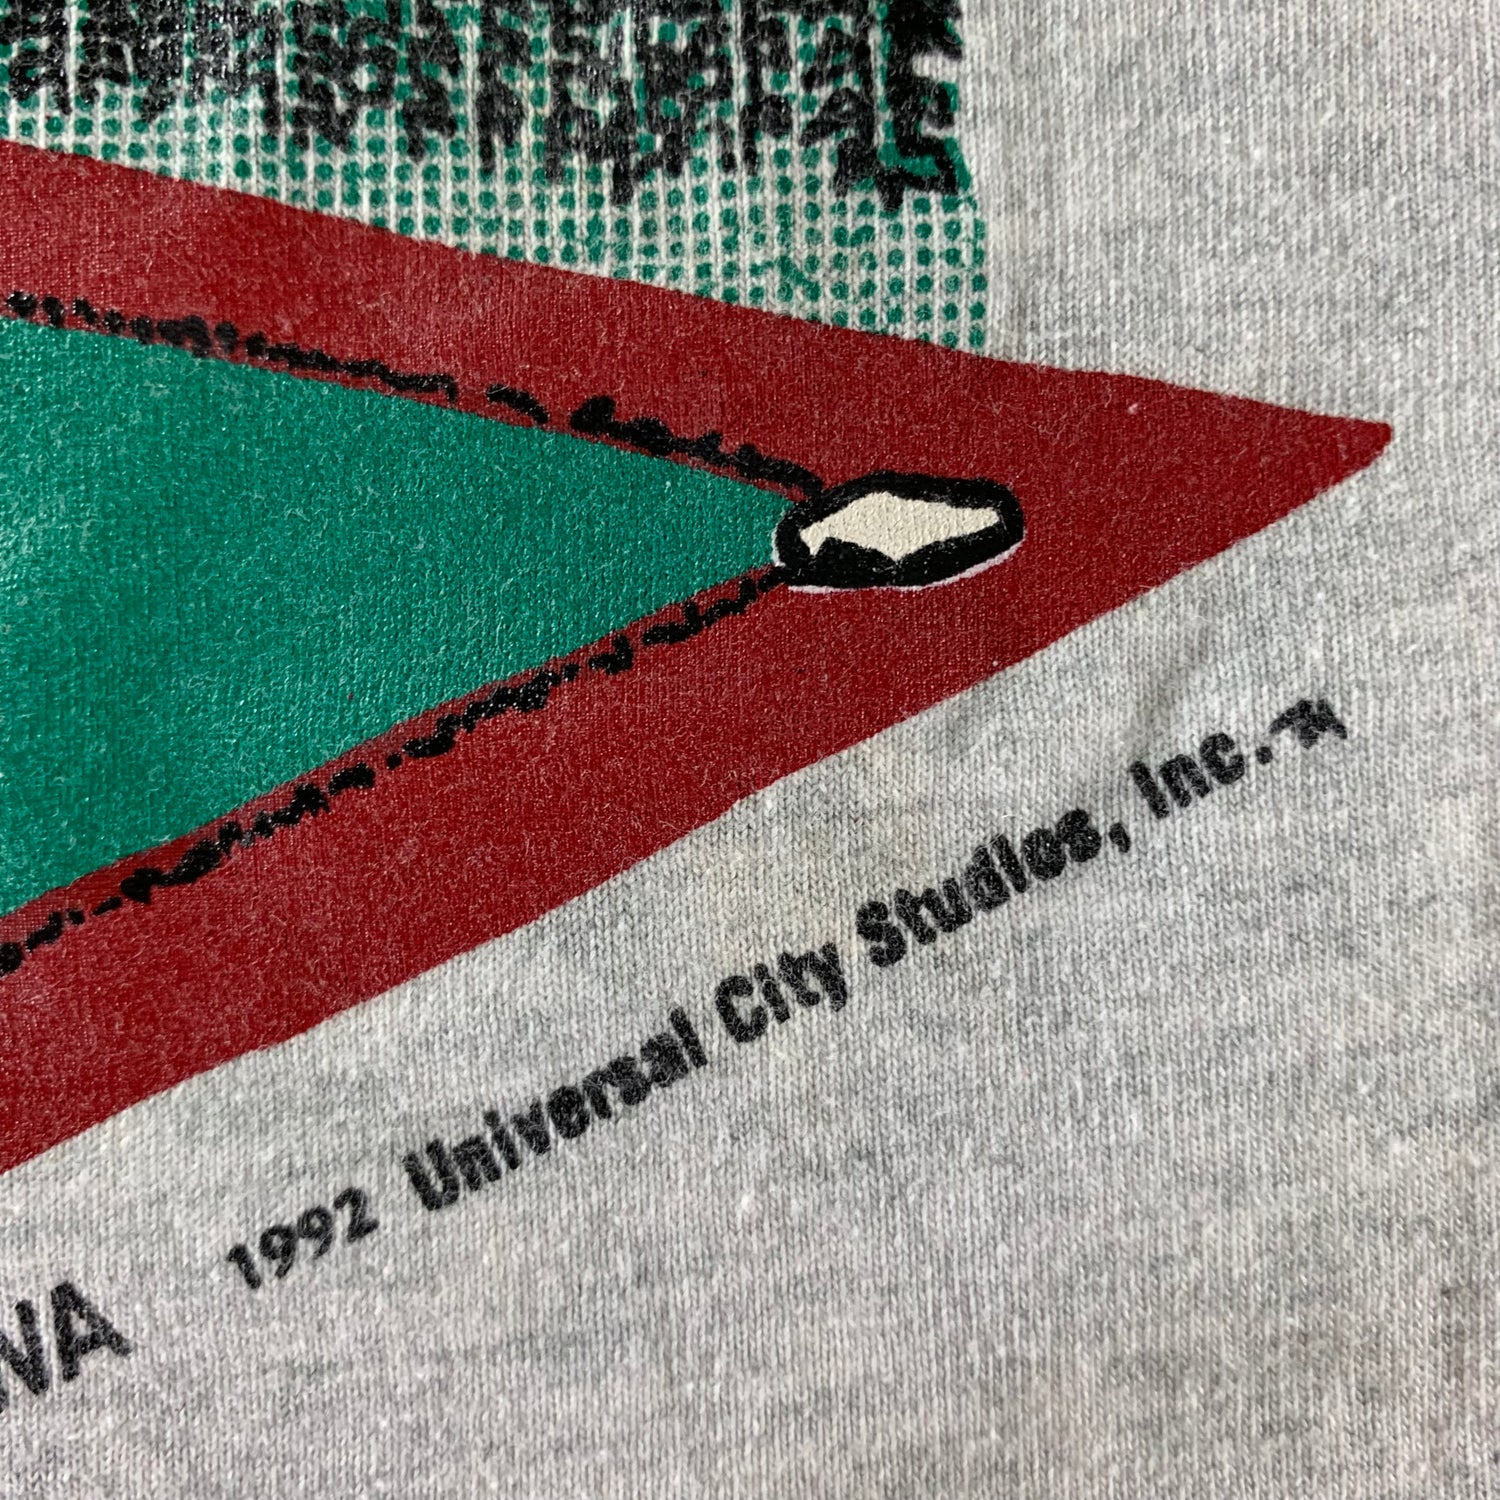 Vintage 1992 Field of Dreams T-shirt size XL